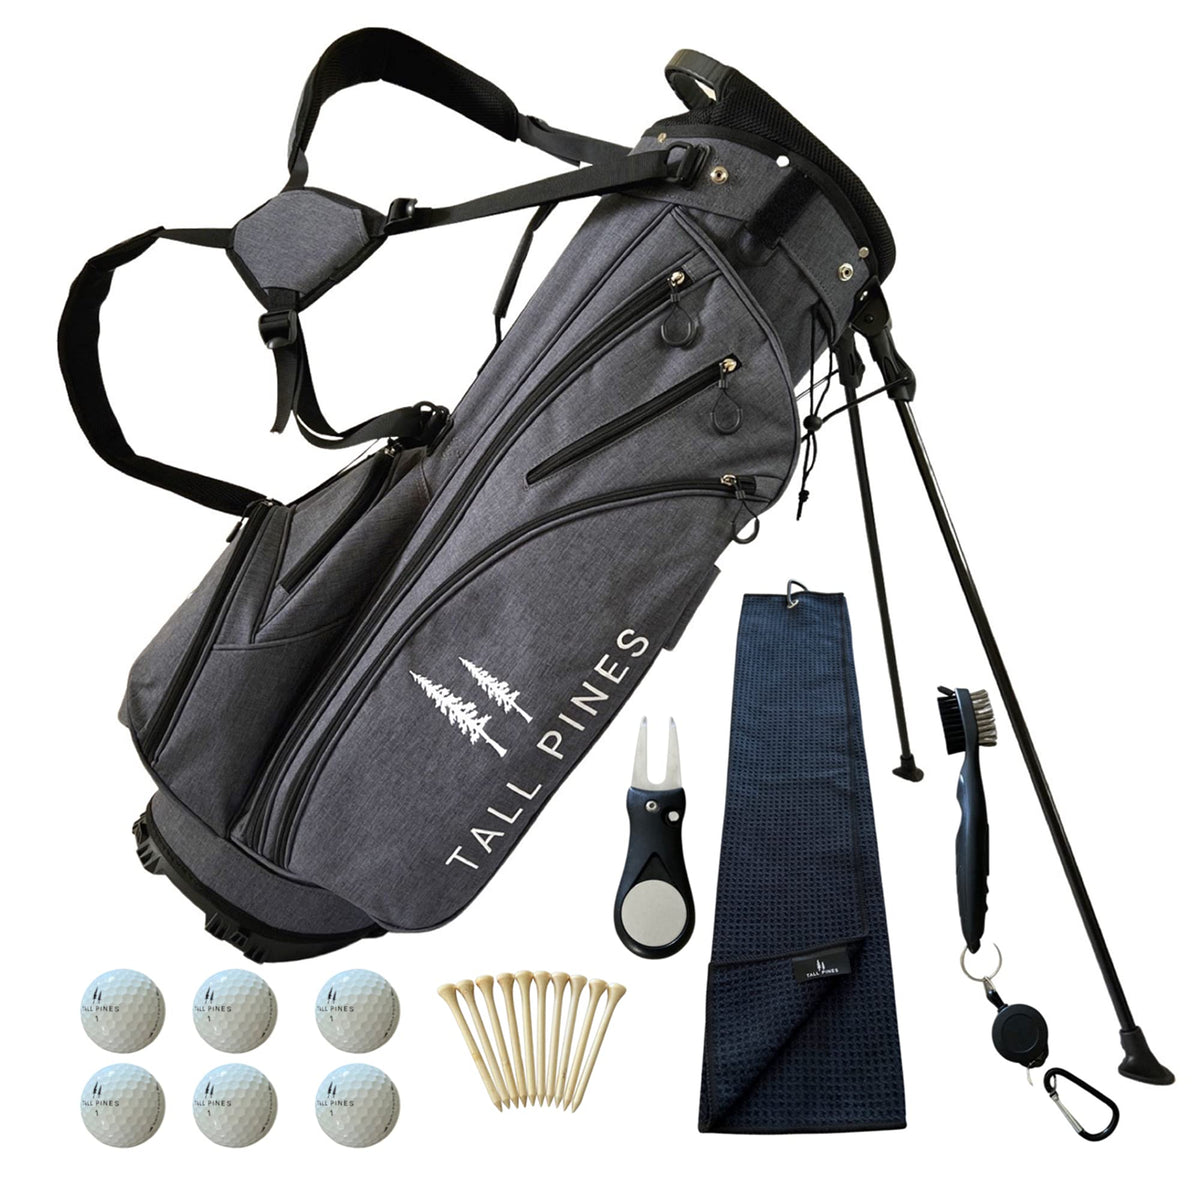 Blade Ball Marker  Miura Golf - Accessories